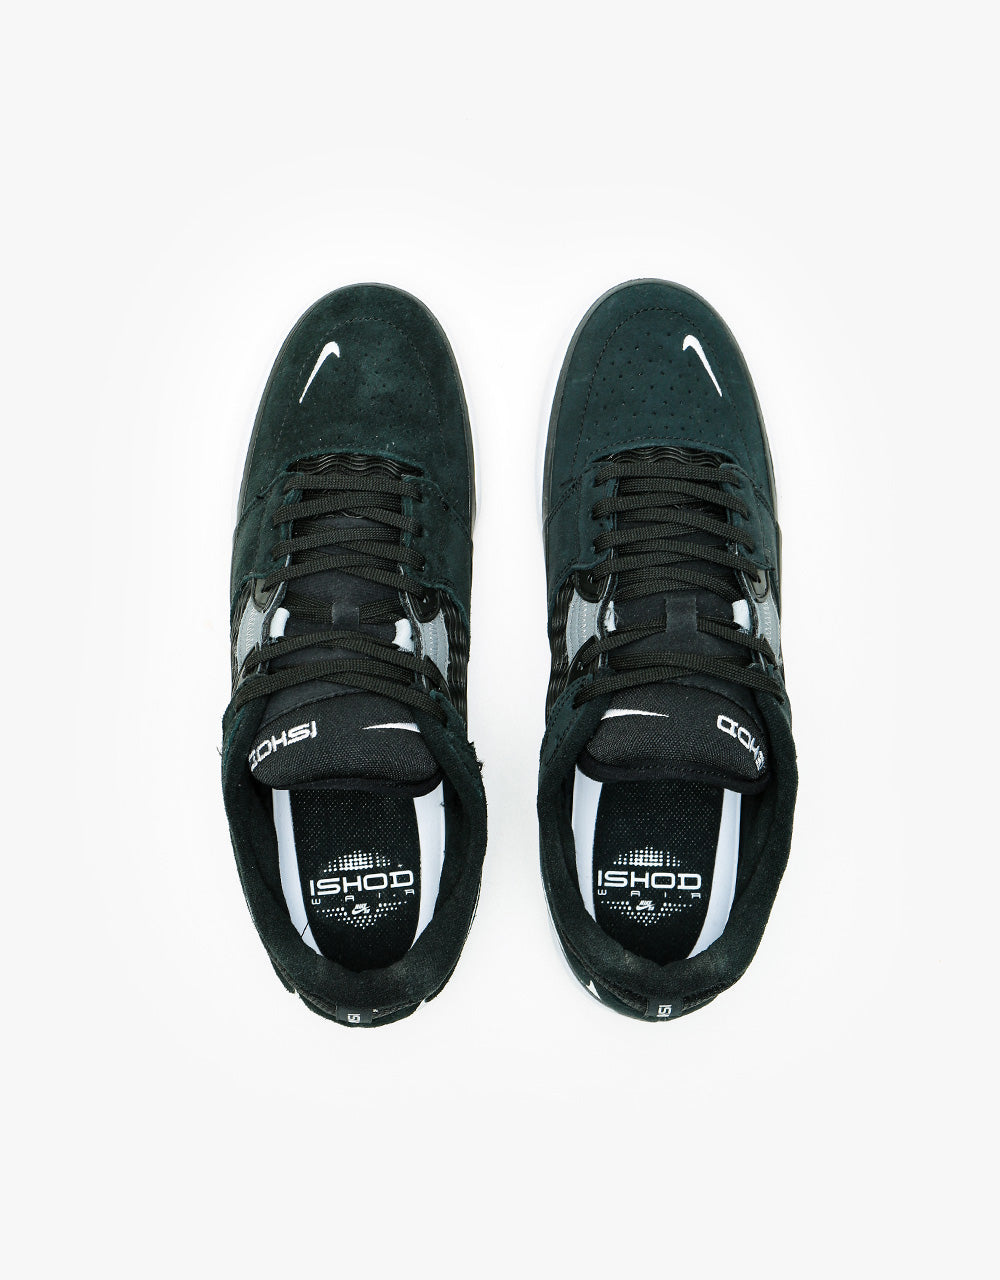 Nike SB Ishod Skate Shoes - Black/White-Dark Grey-Black